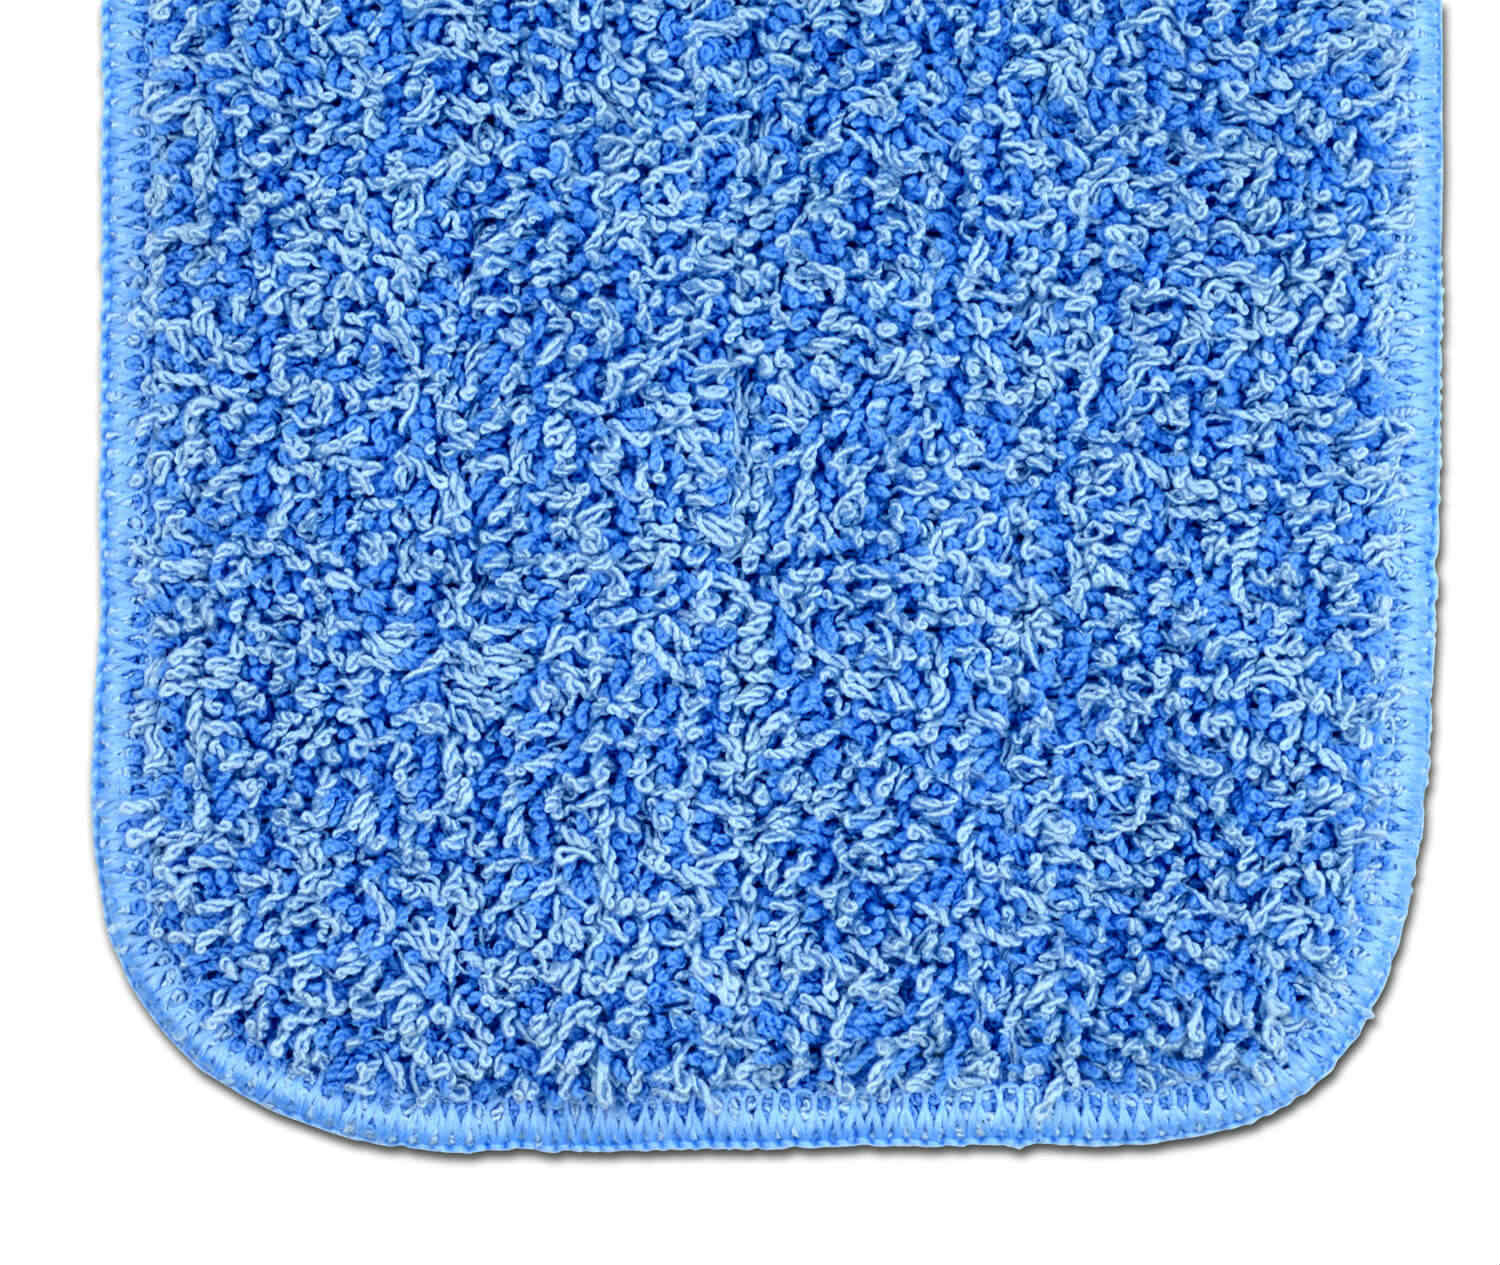 MWM20-20 inch microfiber wet mop pad Blue